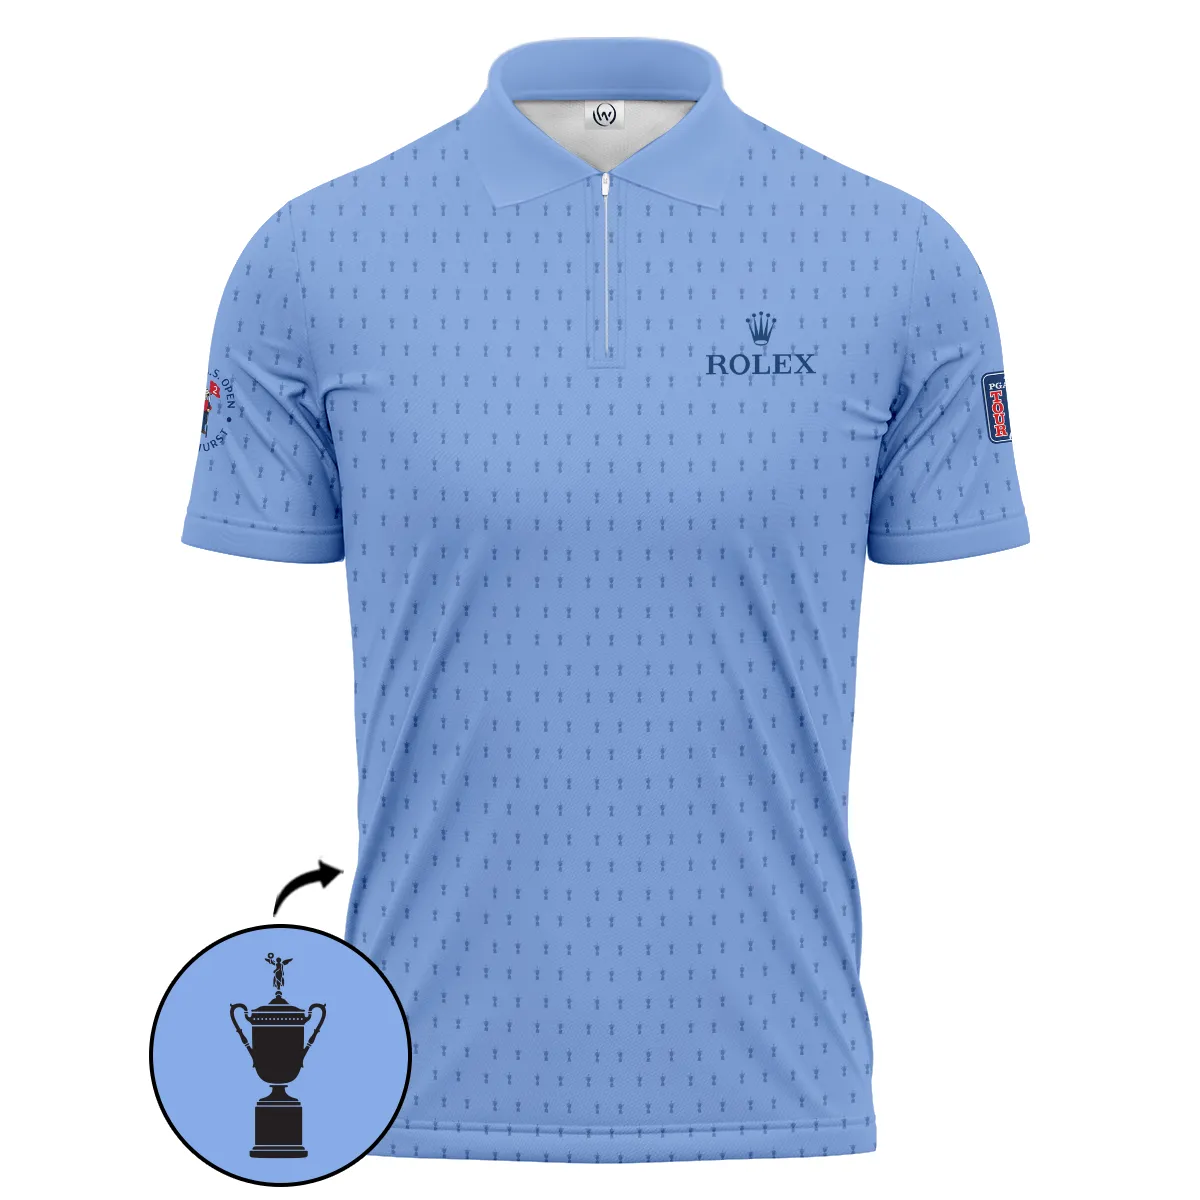 Golf Pattern Cup Blue 124th U.S. Open Pinehurst Pinehurst Rolex Sleeveless Jacket Style Classic